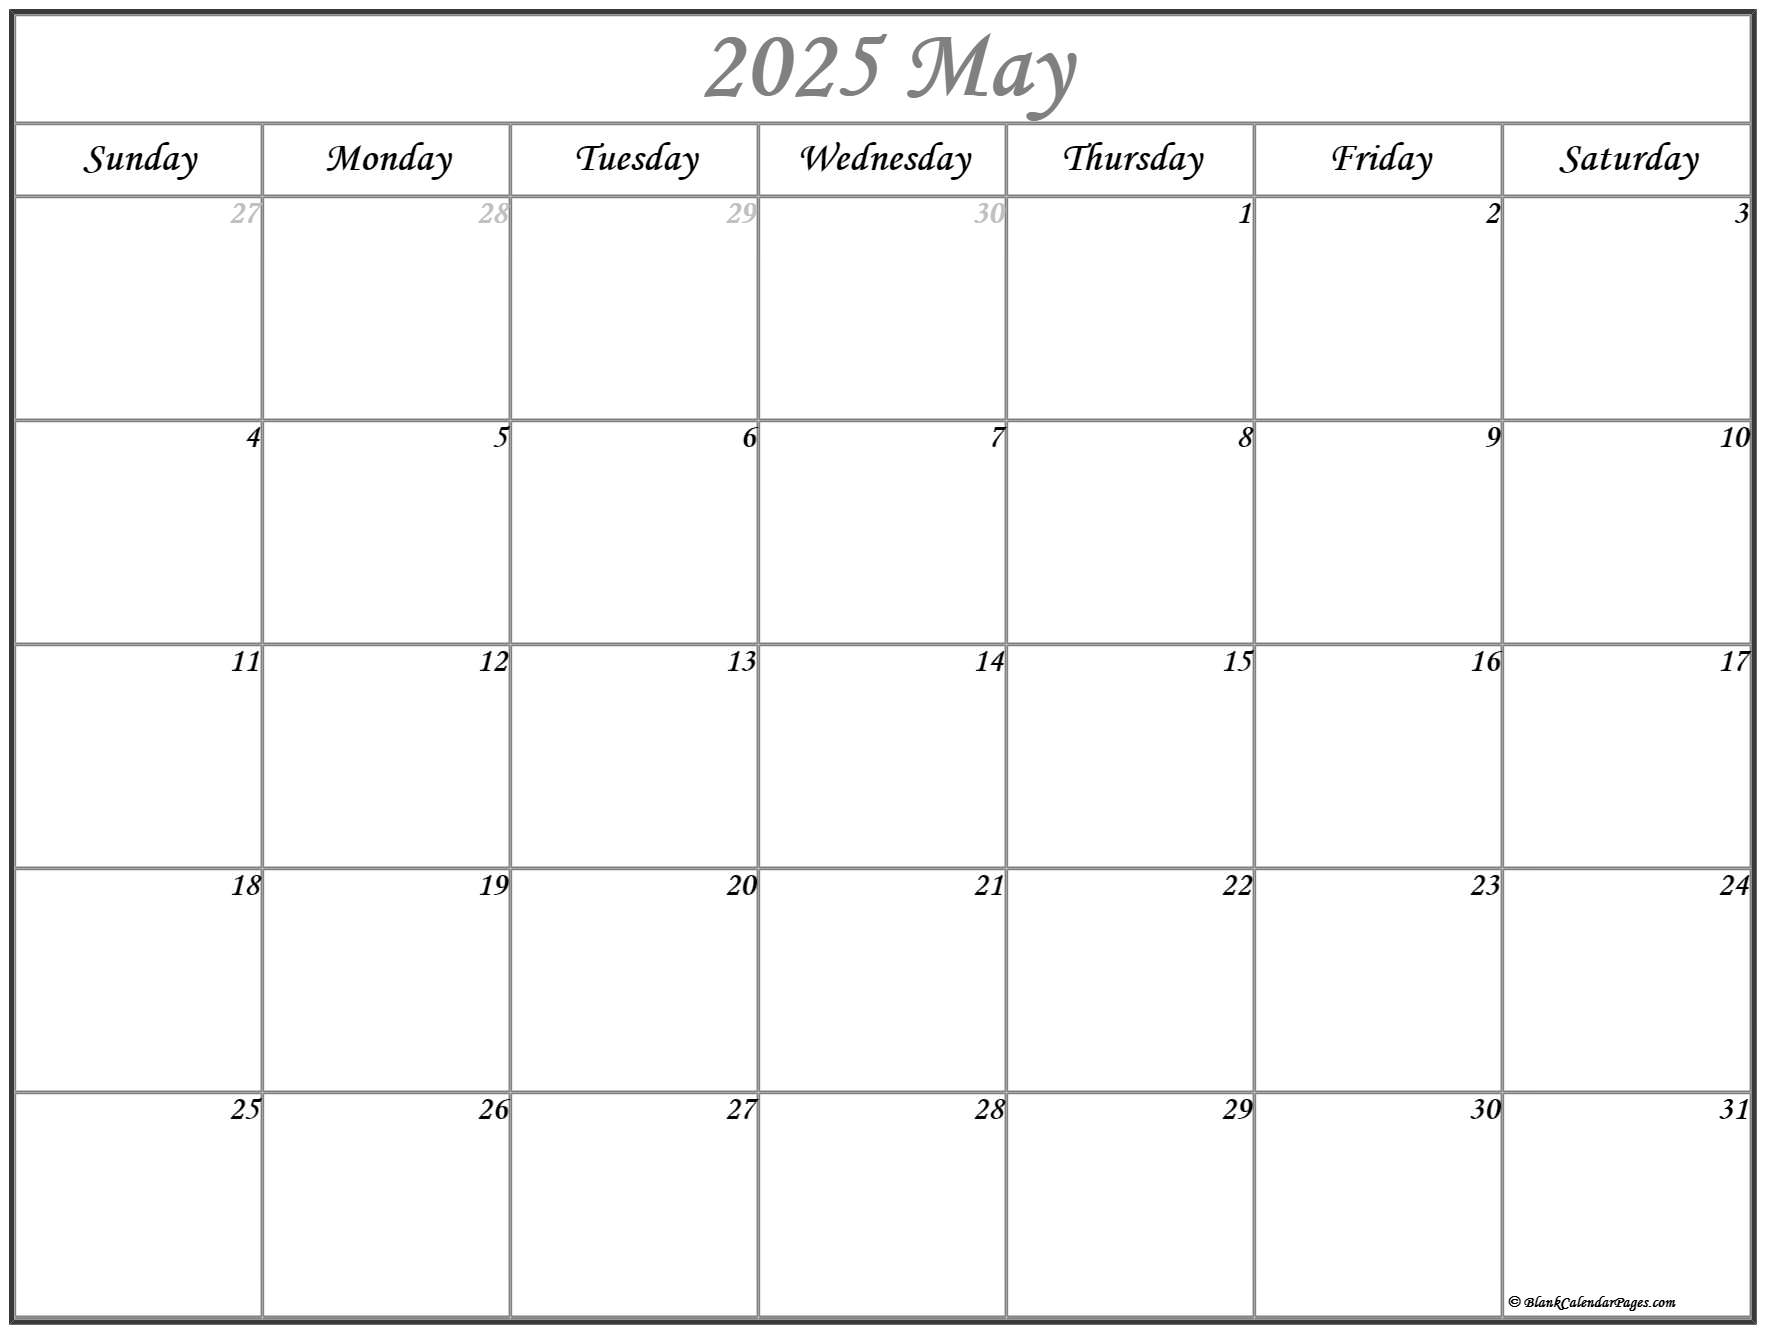 May 2025 calendar free printable calendar